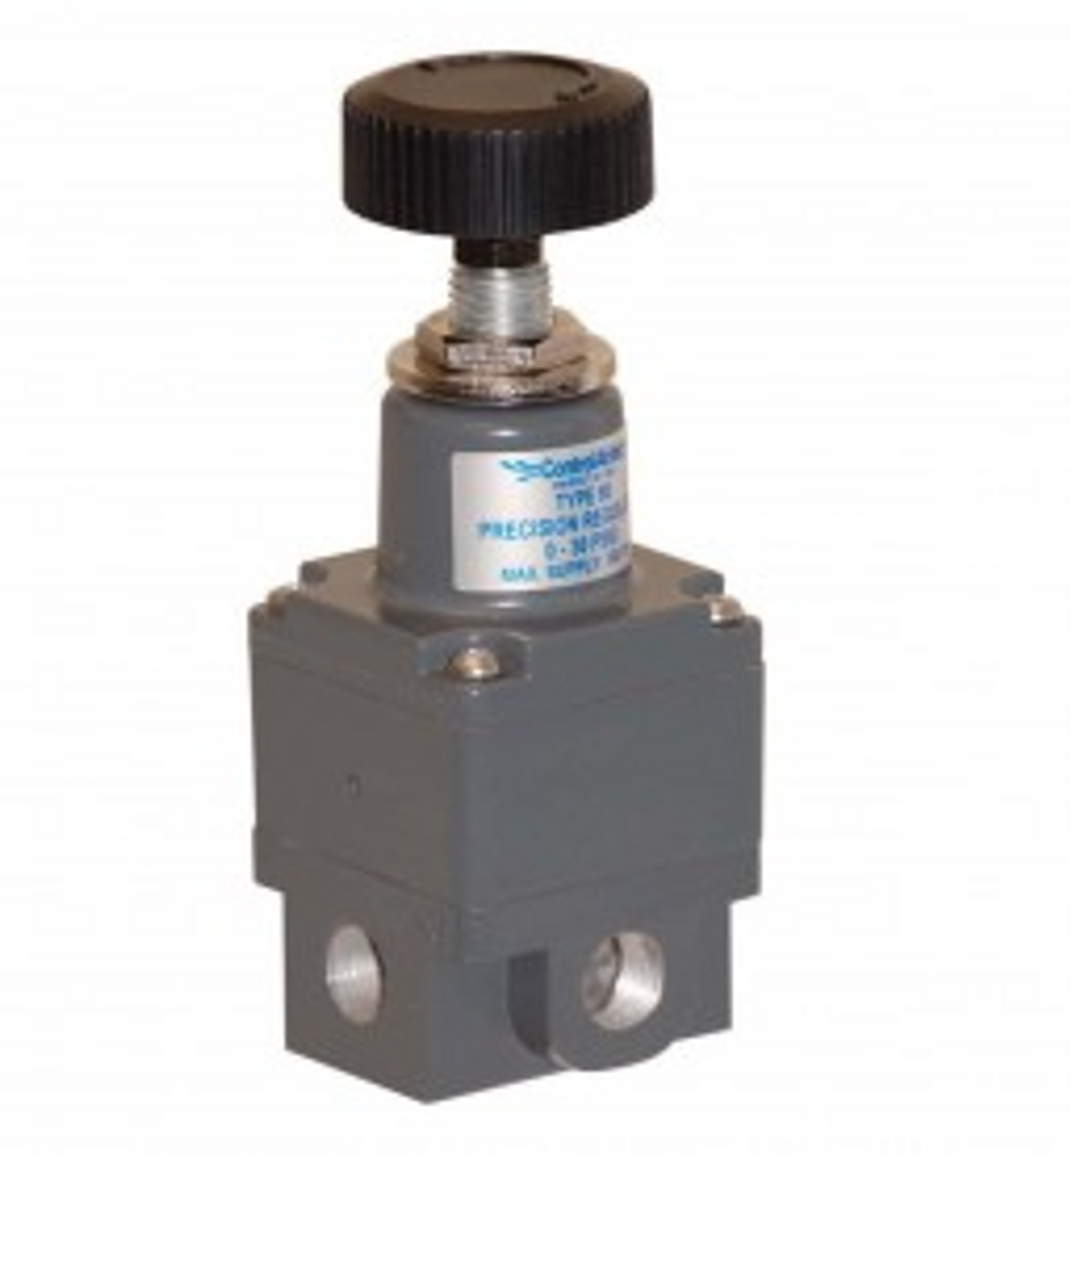 90-UA miniature air pressure regulator